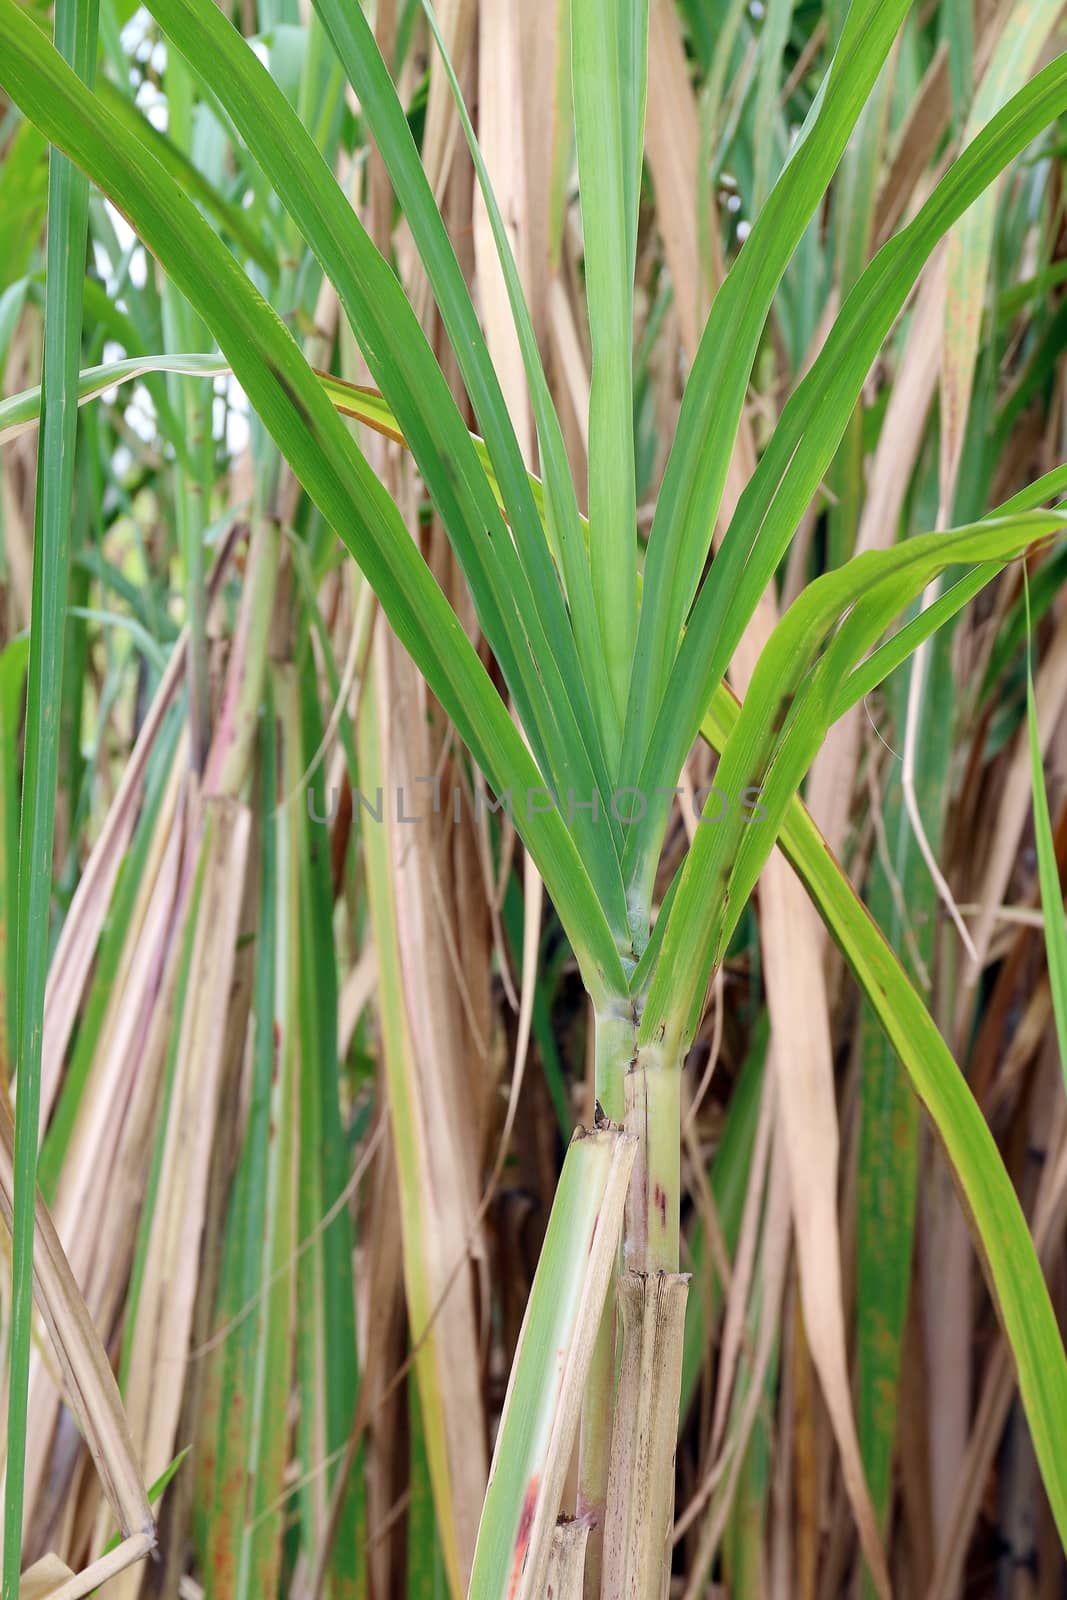 Sugarcane tree plantation, Sugarcane leaves fresh green close-up